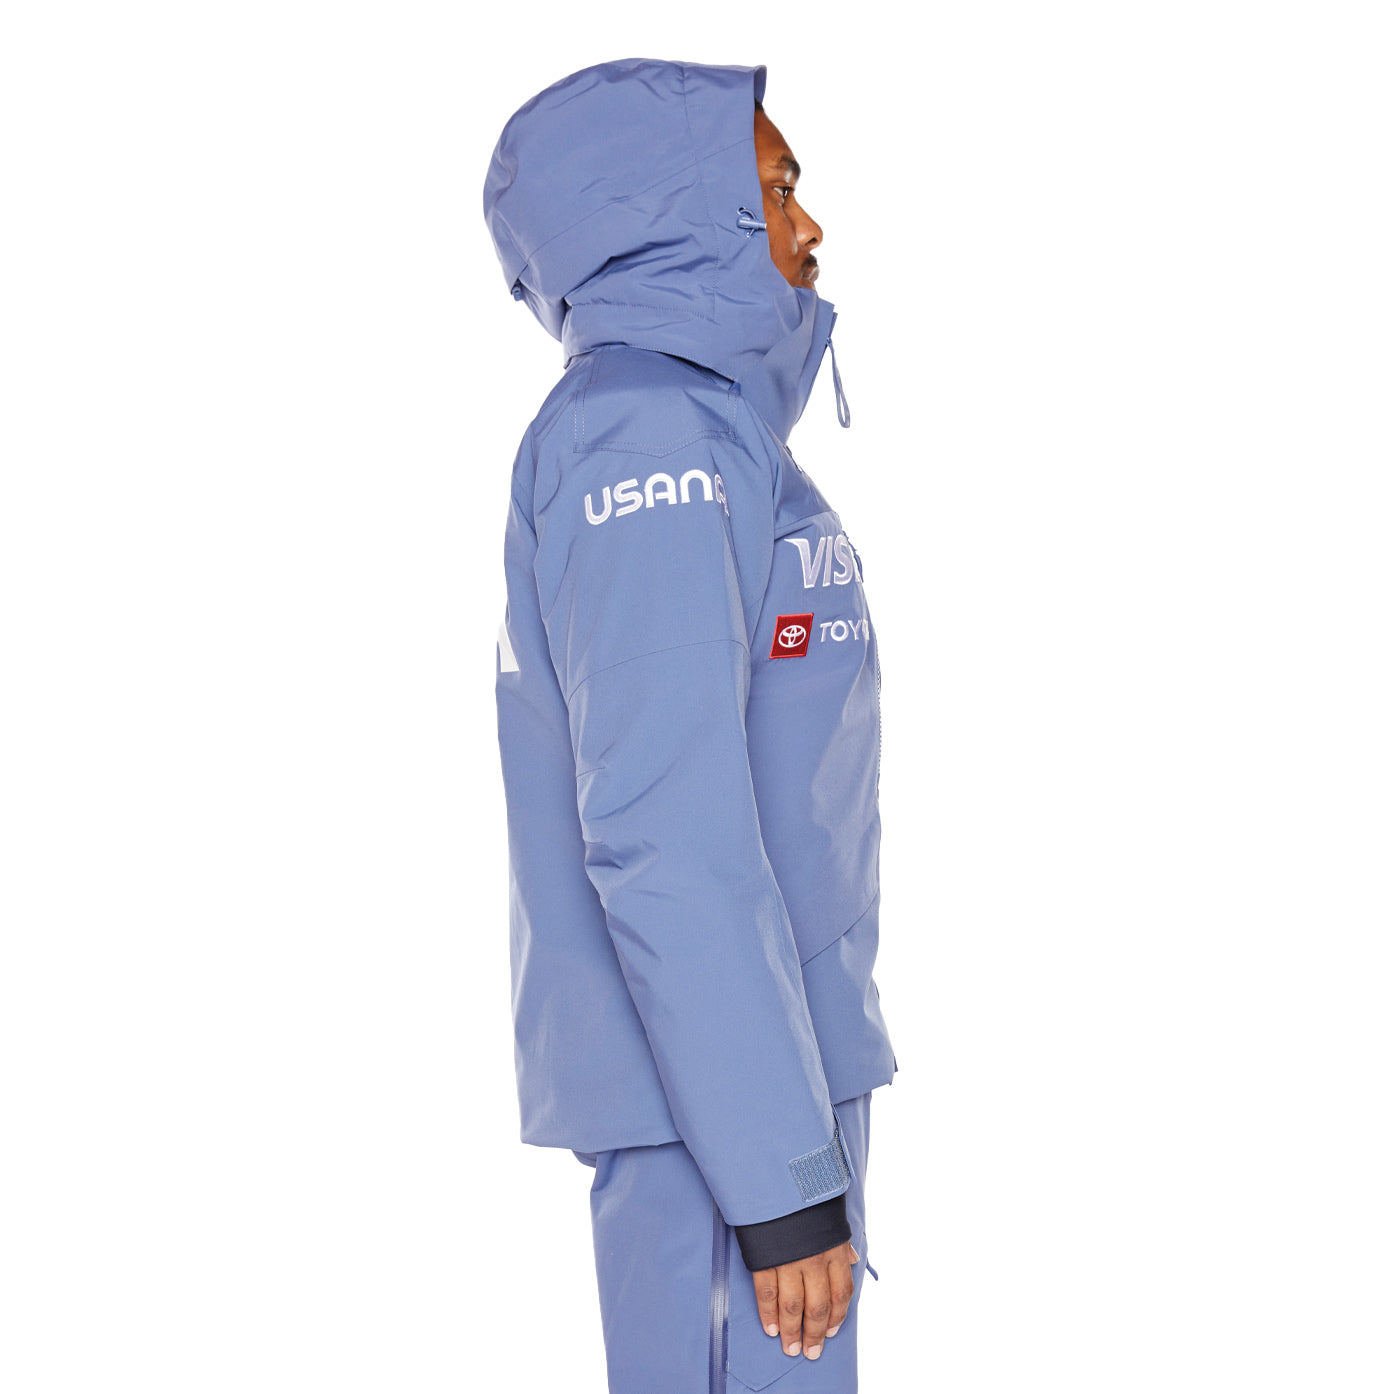 6Cento 602T US Ski USA Blue - – Jacket Fiord Kappa